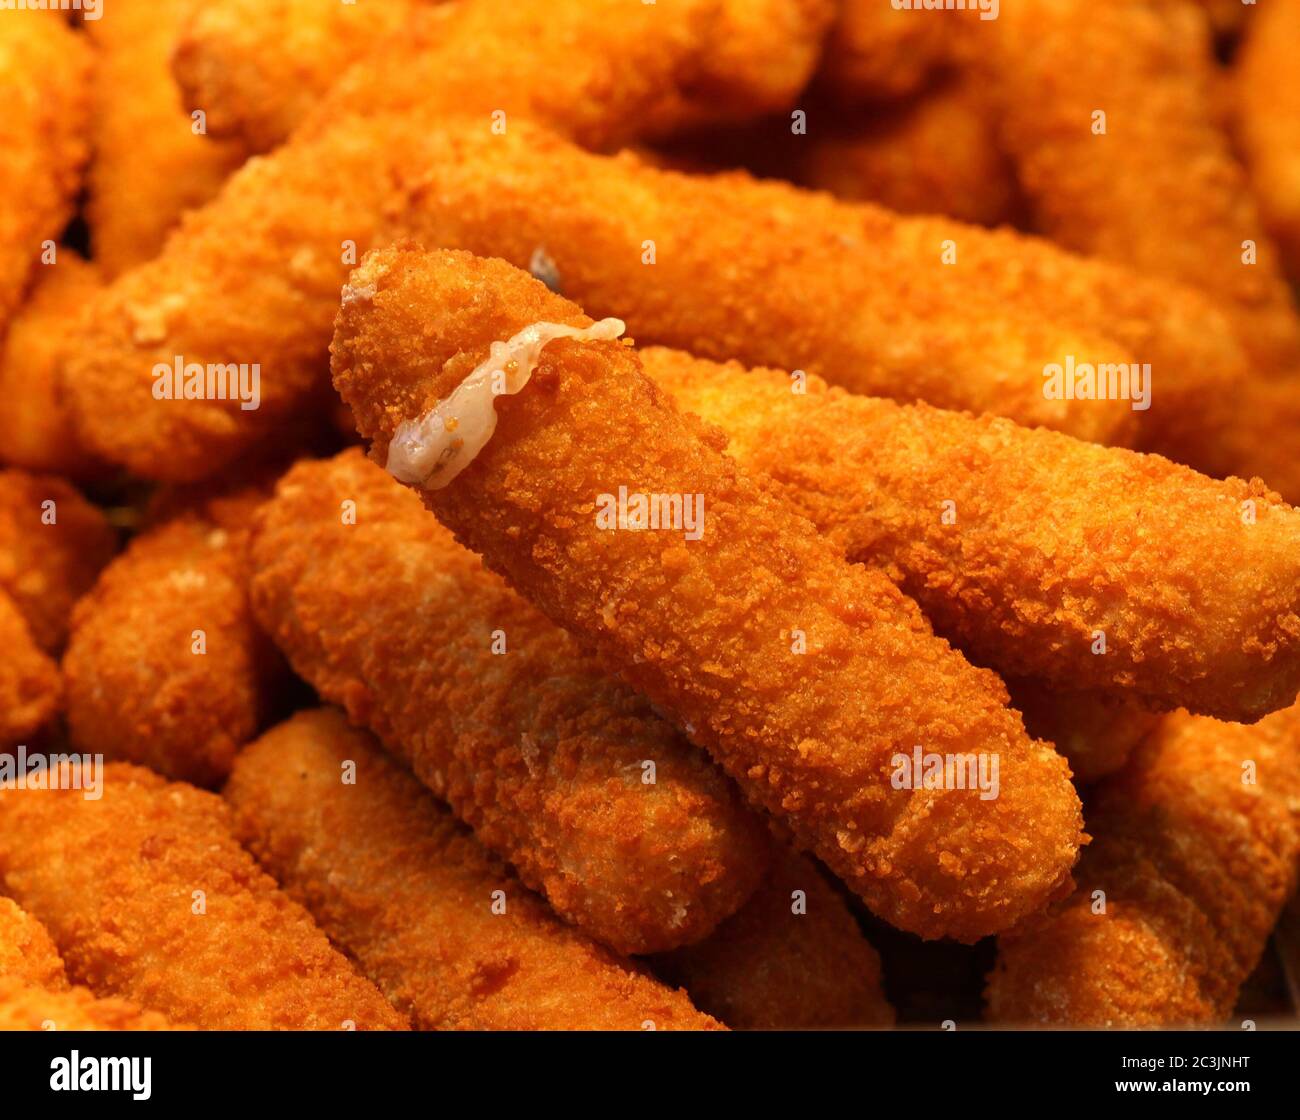 Golden fried mozzarella sticks at a street fair Stock Photo